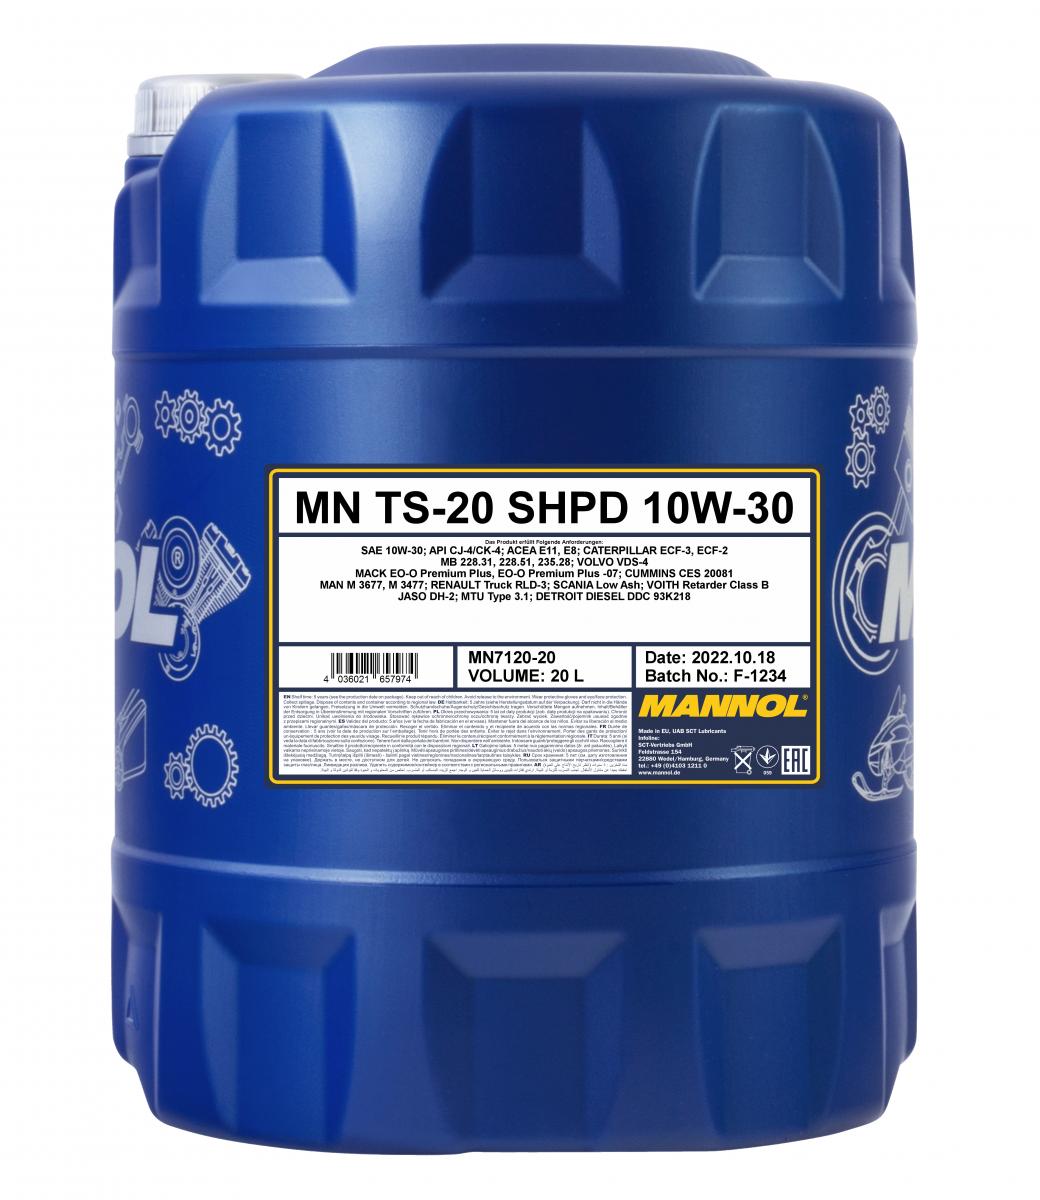 MN TS-20 SHPD 10W-30